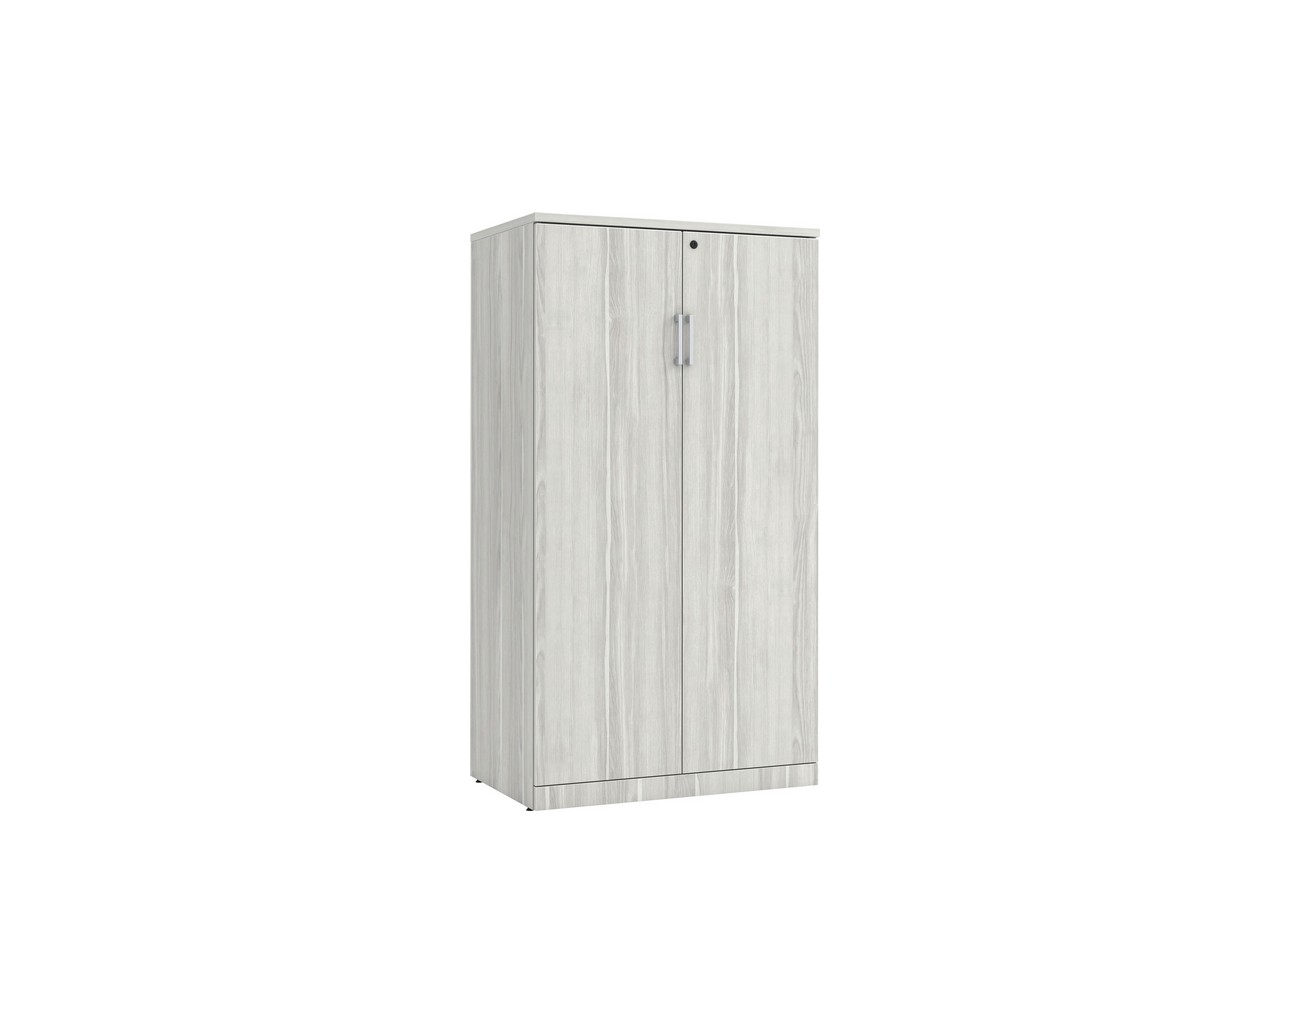 Locking Double Door Storage Cabinet 65 Inch with Silver Birch Finish